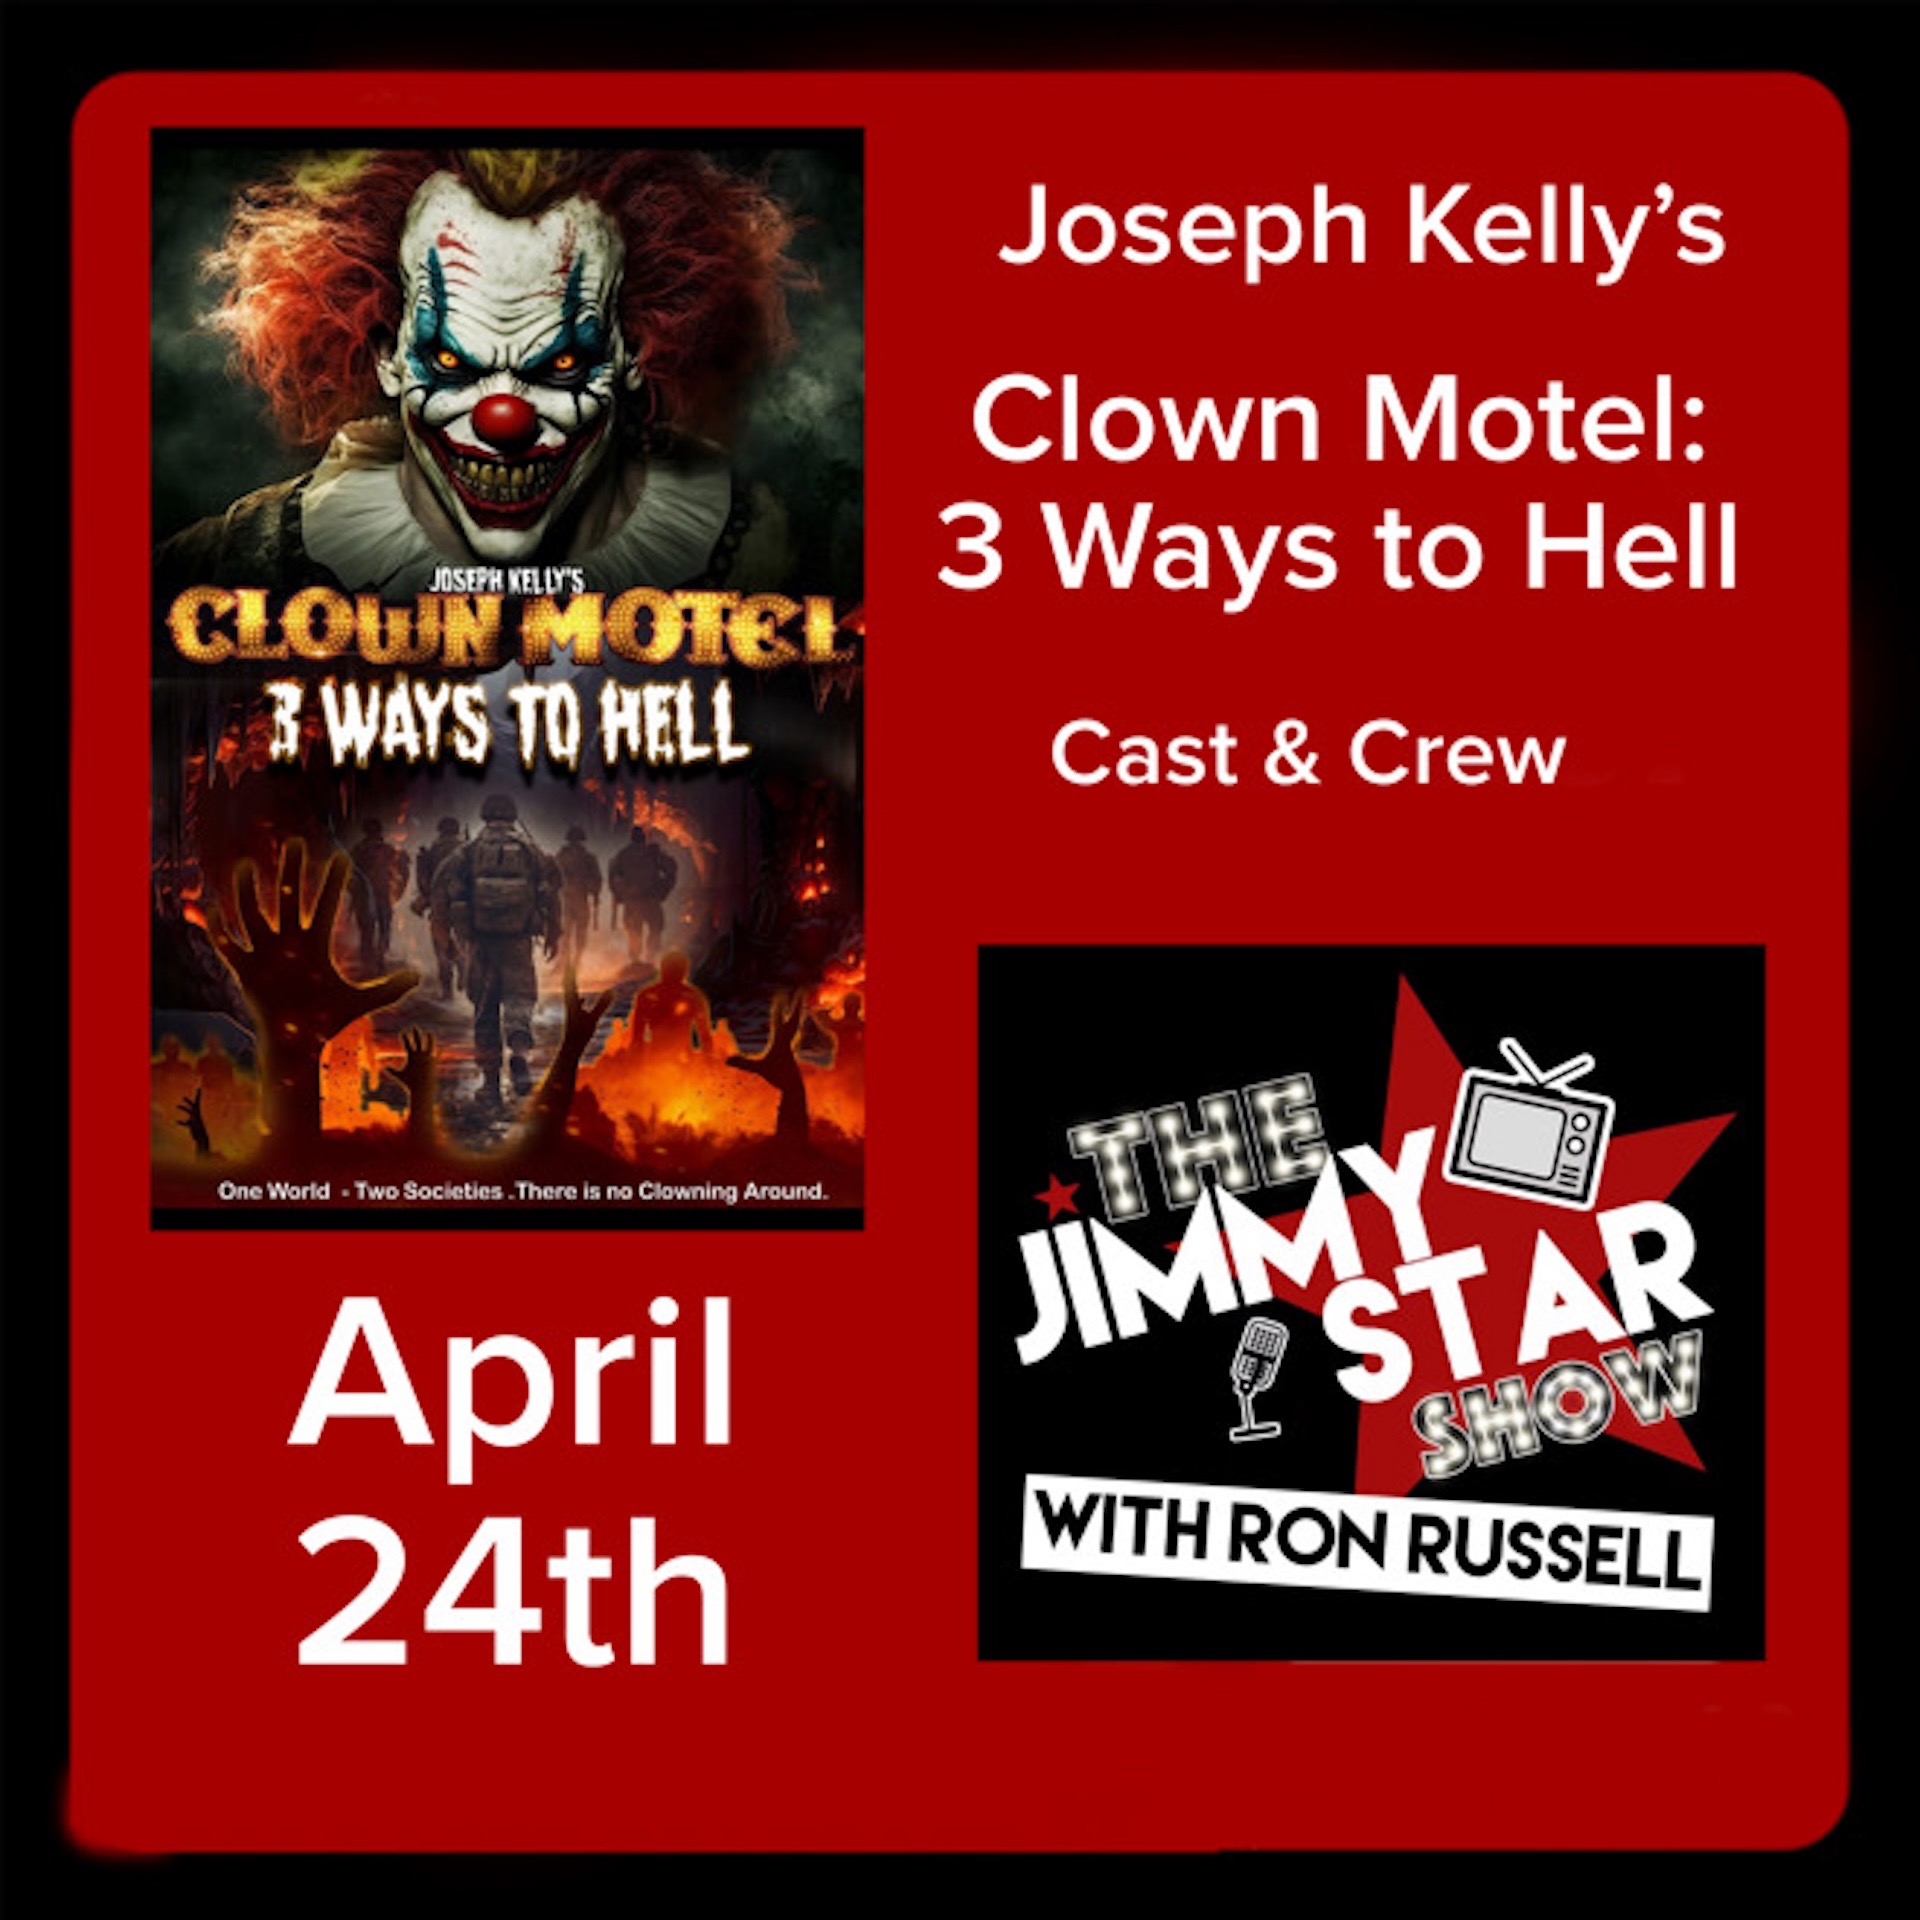 Joseph Kelly's "Clown Motel: 3 Ways To Hell